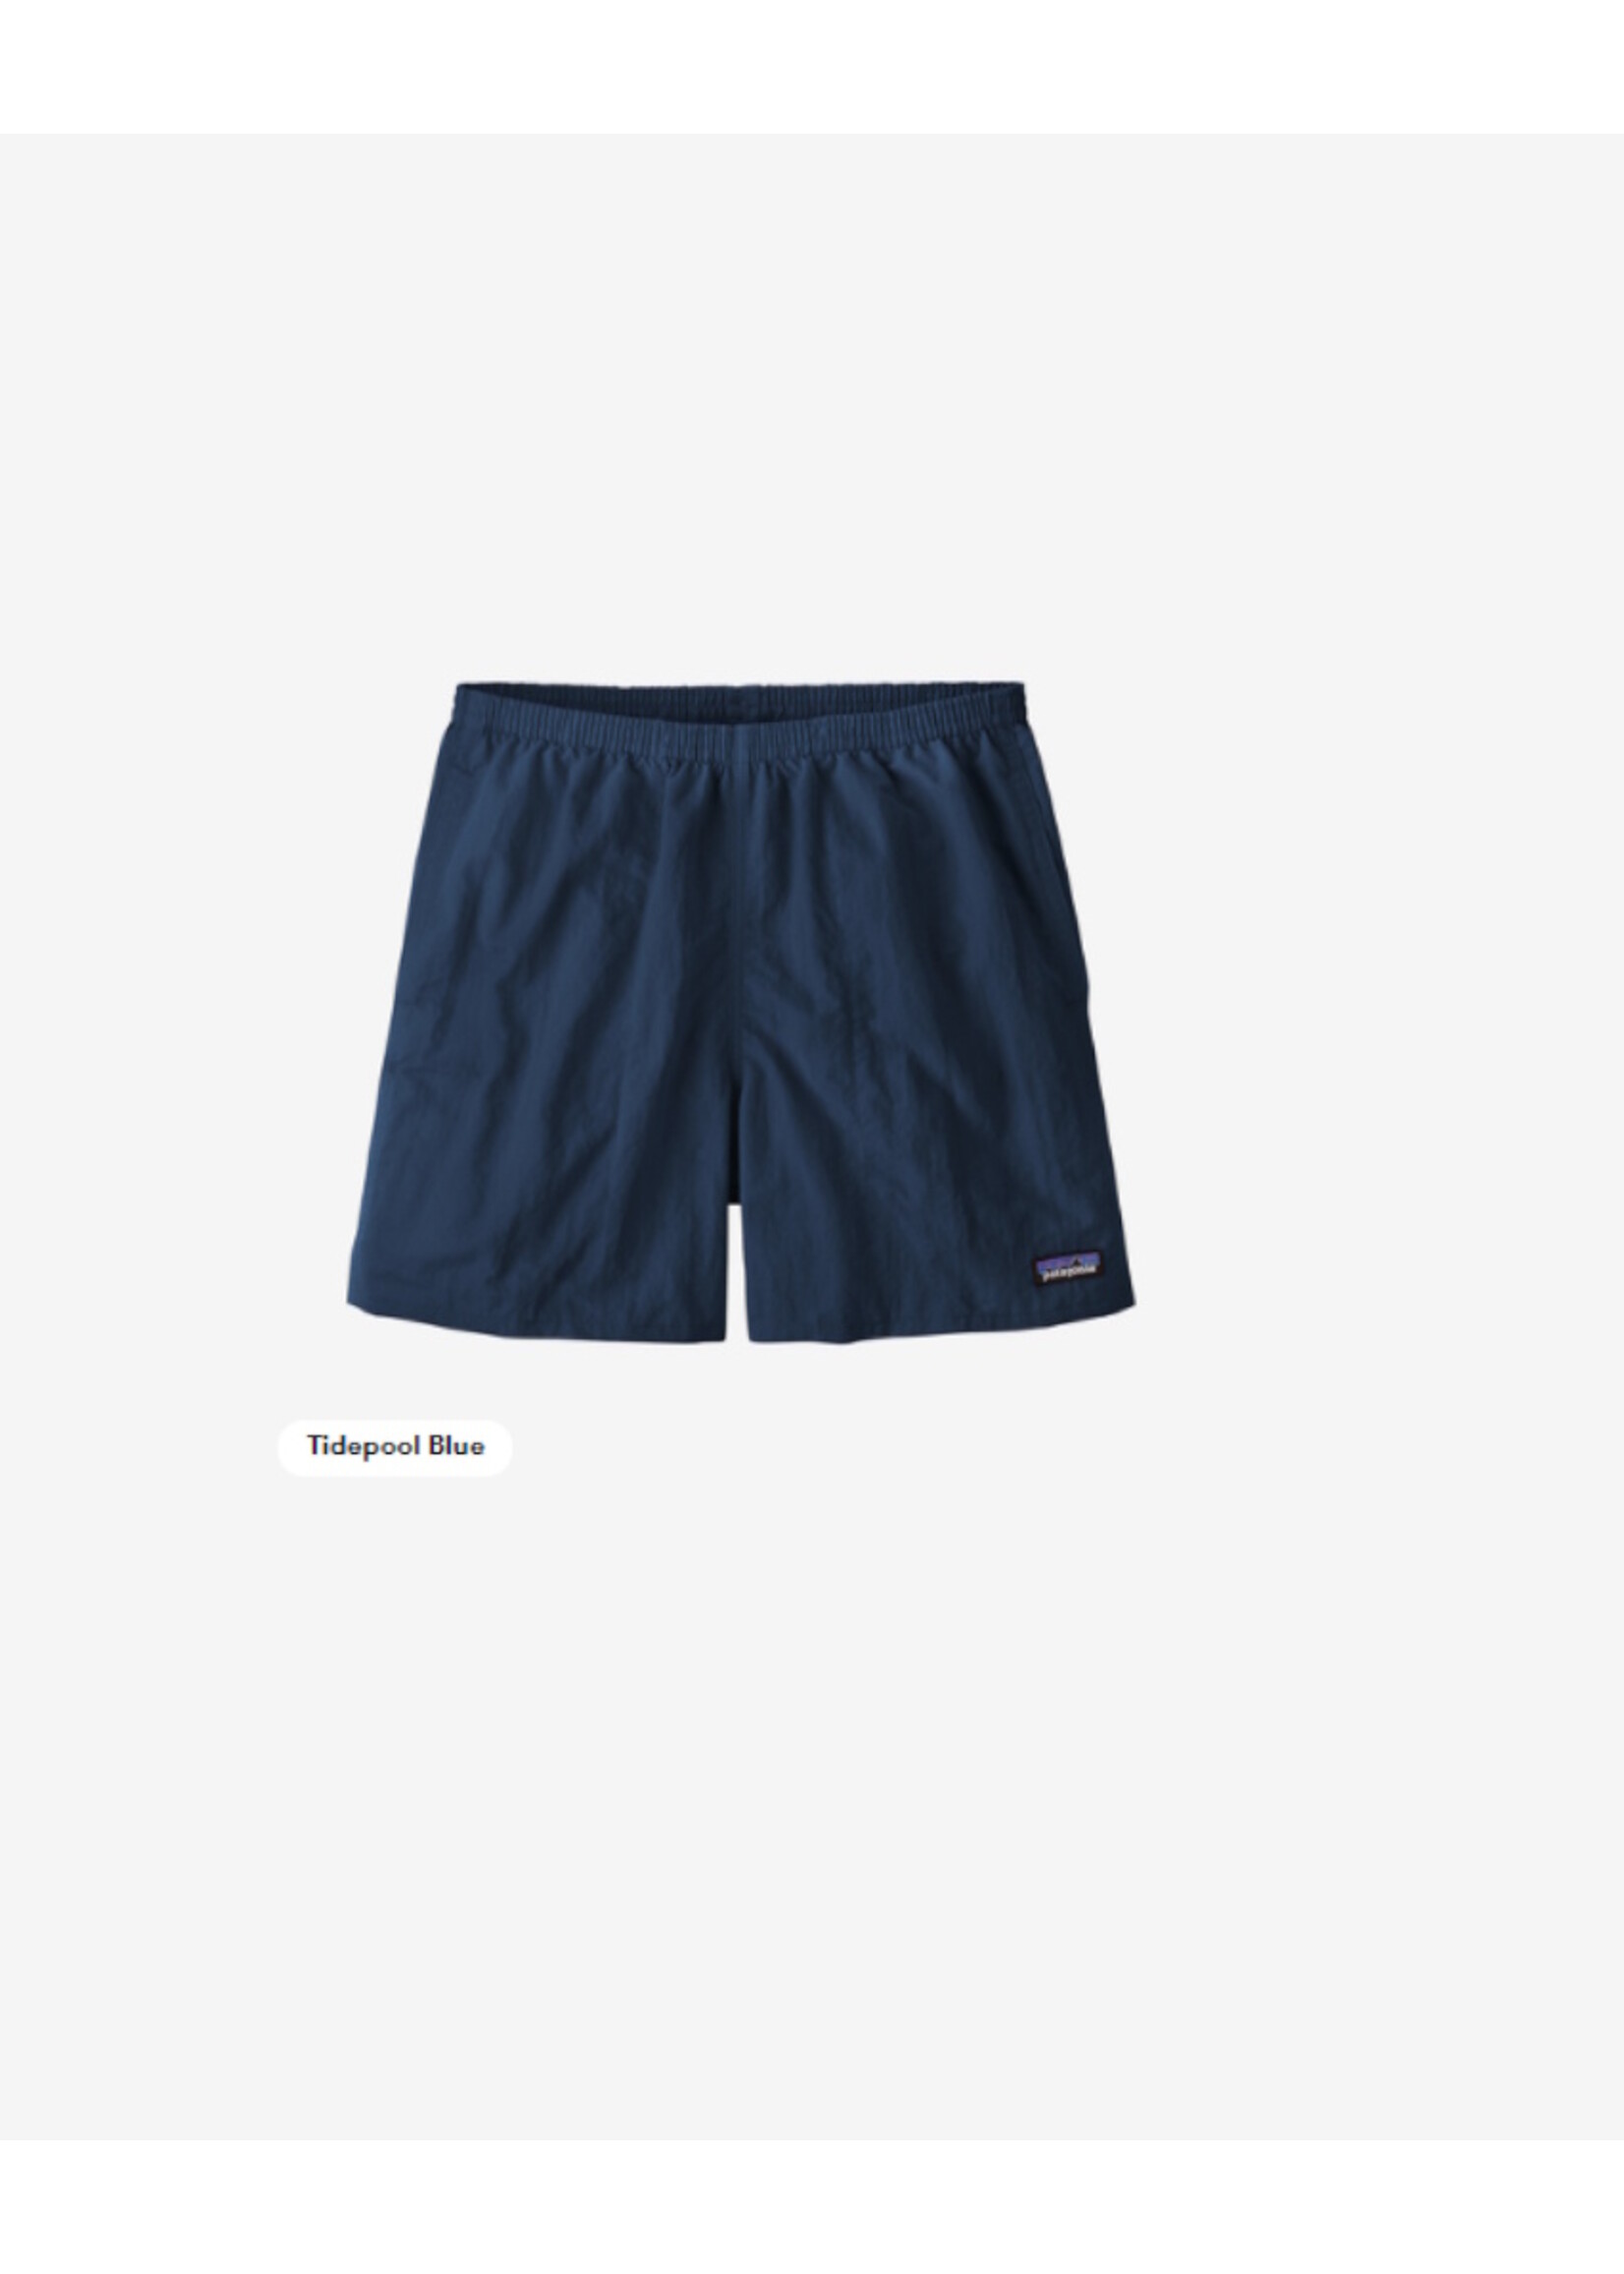 Baggies Shorts 5 in. Mens - Redding Sports Ltd